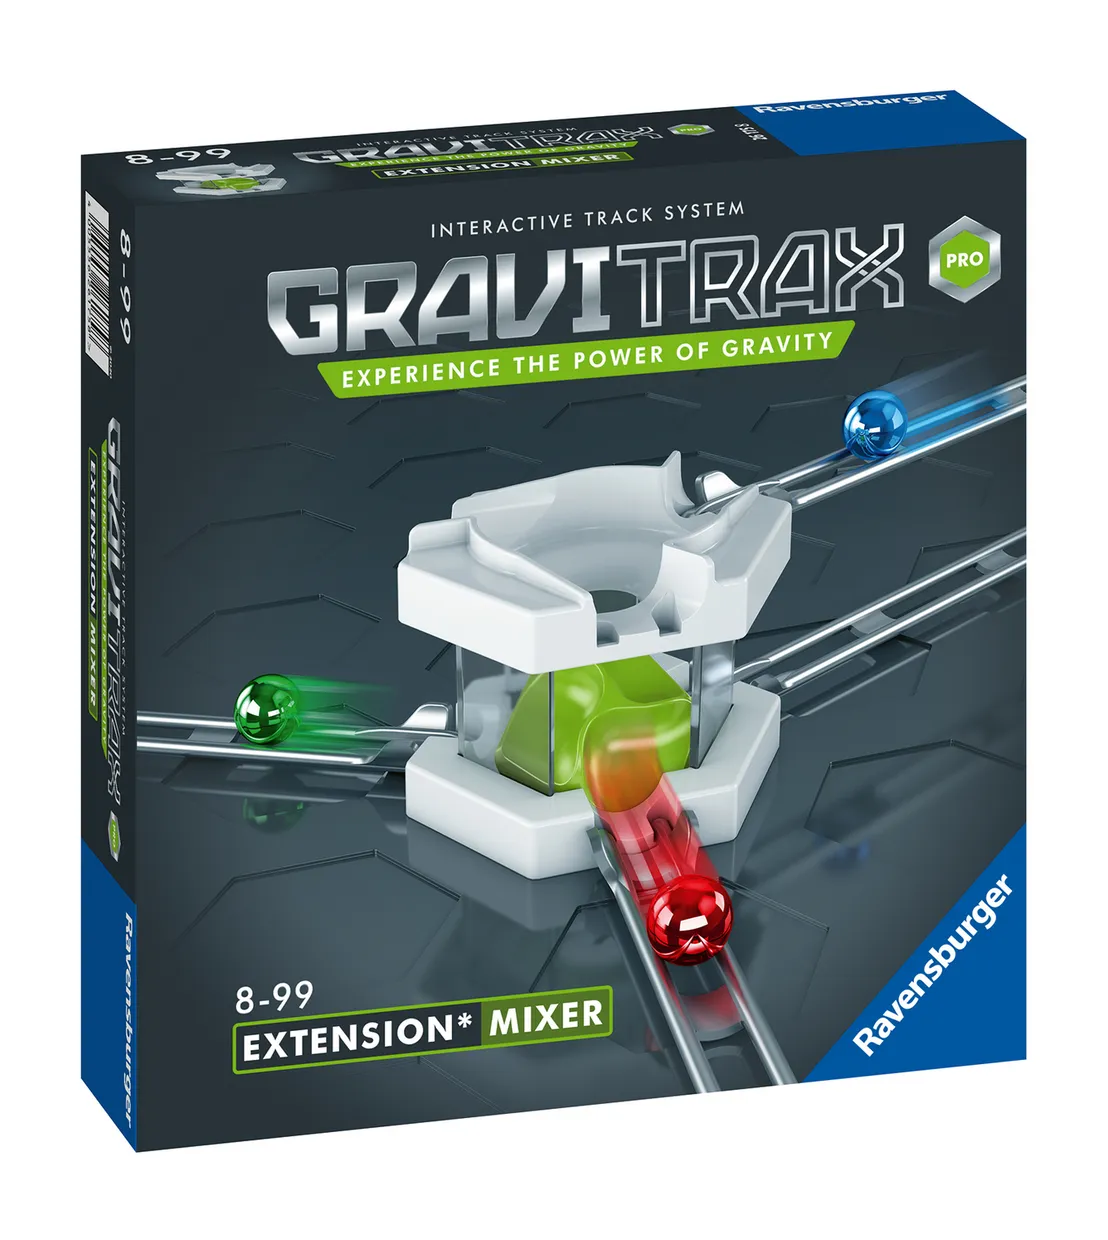 GraviTrax Vertical Mixer